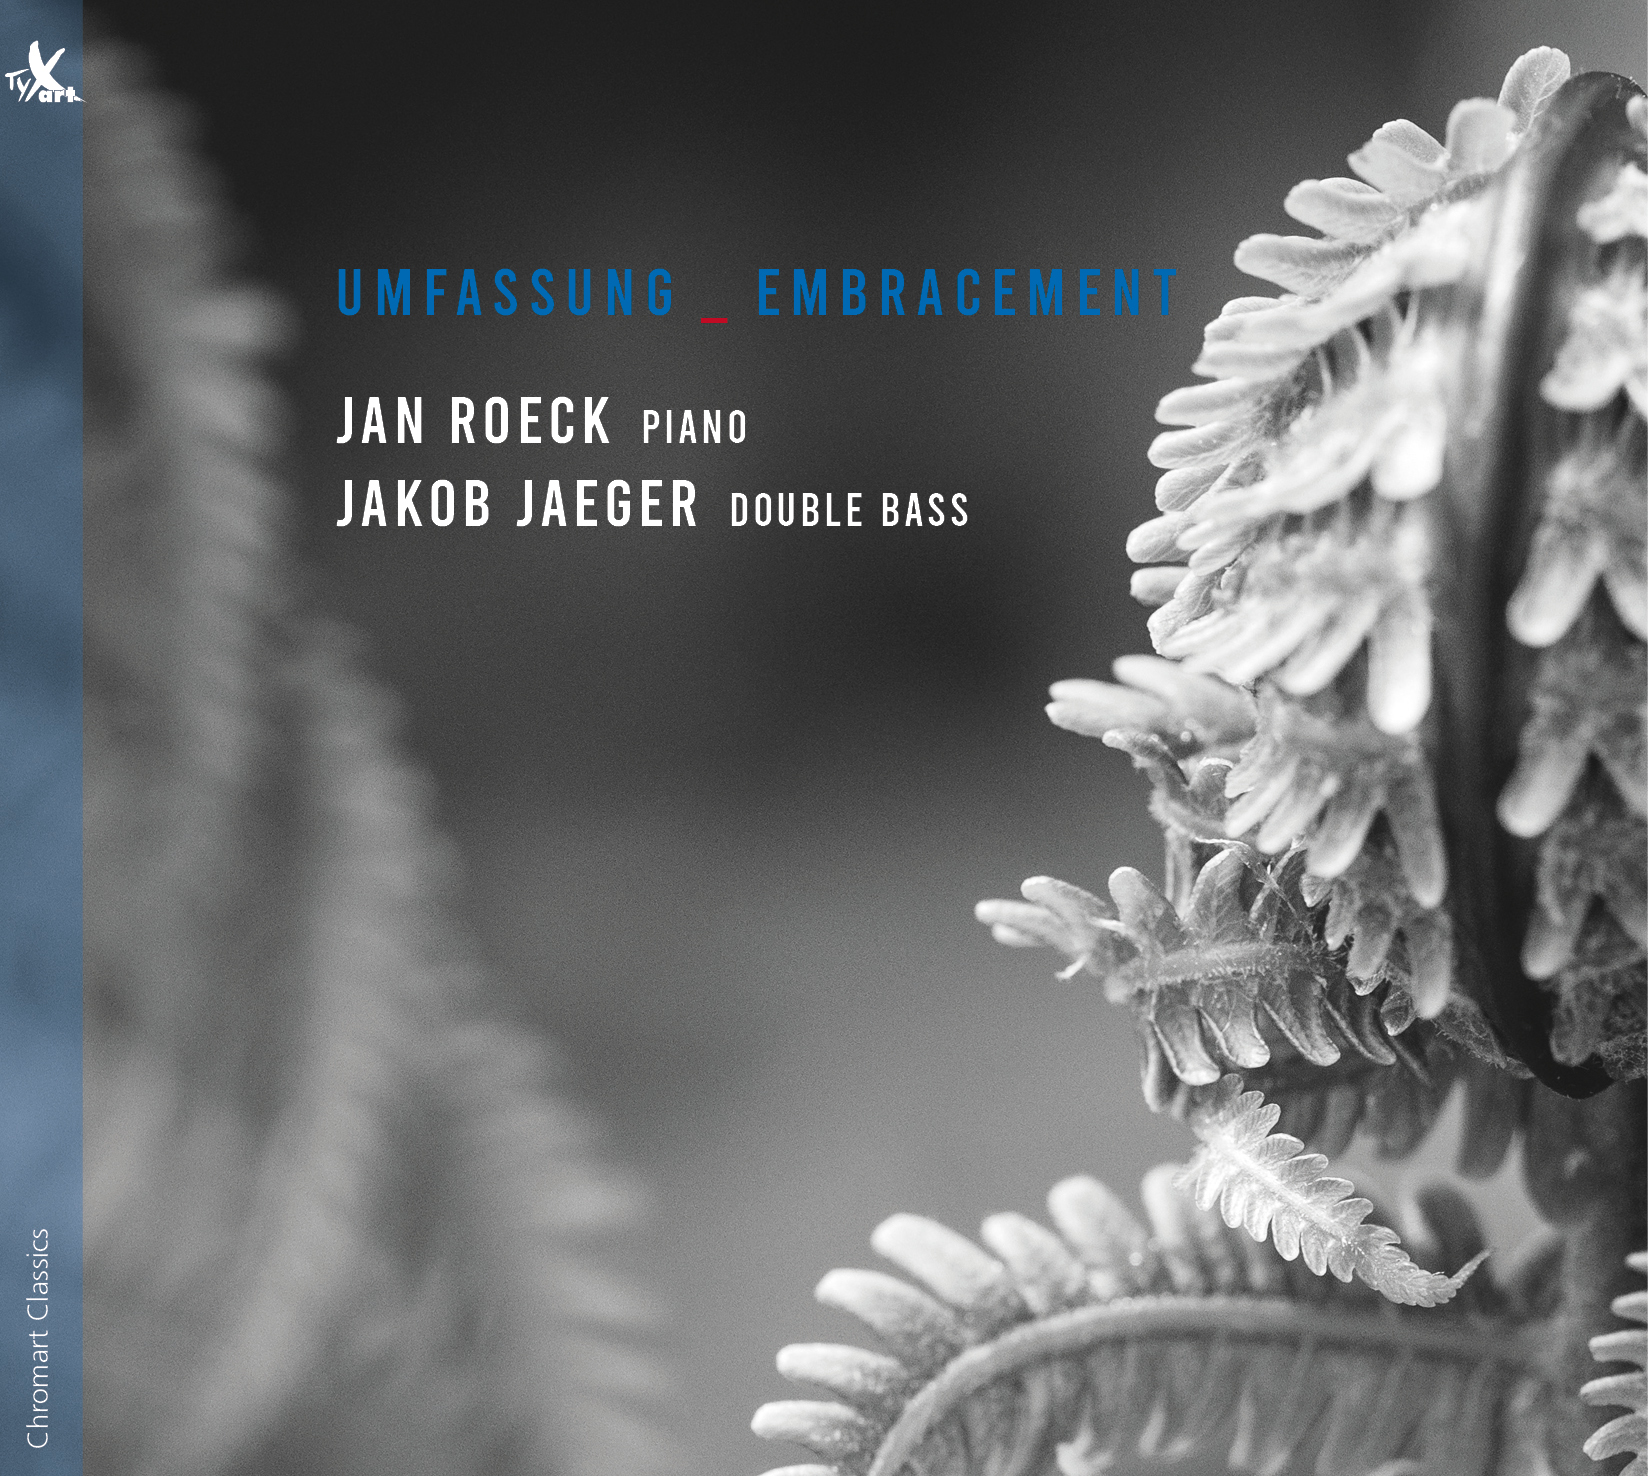 Embracement _ Umfassung - Jan Roeck and Jakob Jaeger